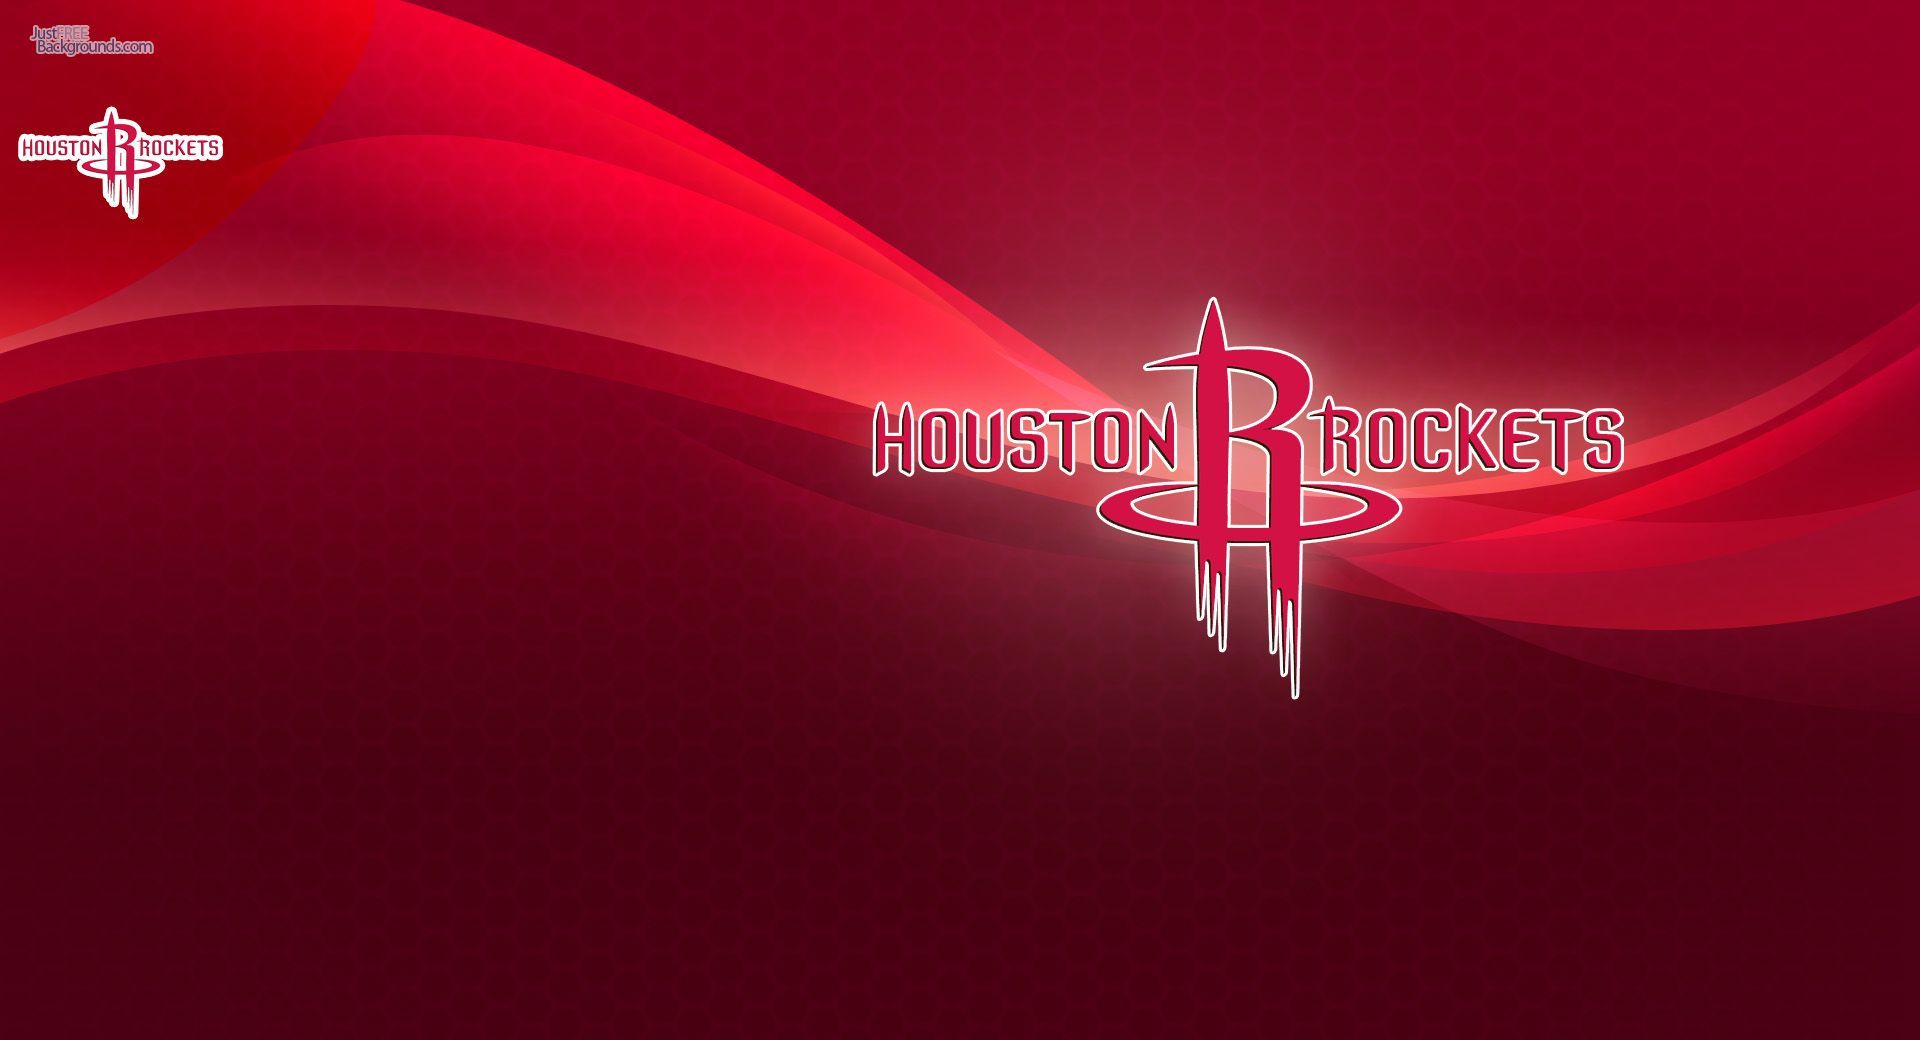 Houston Rockets wallpaper HD free download